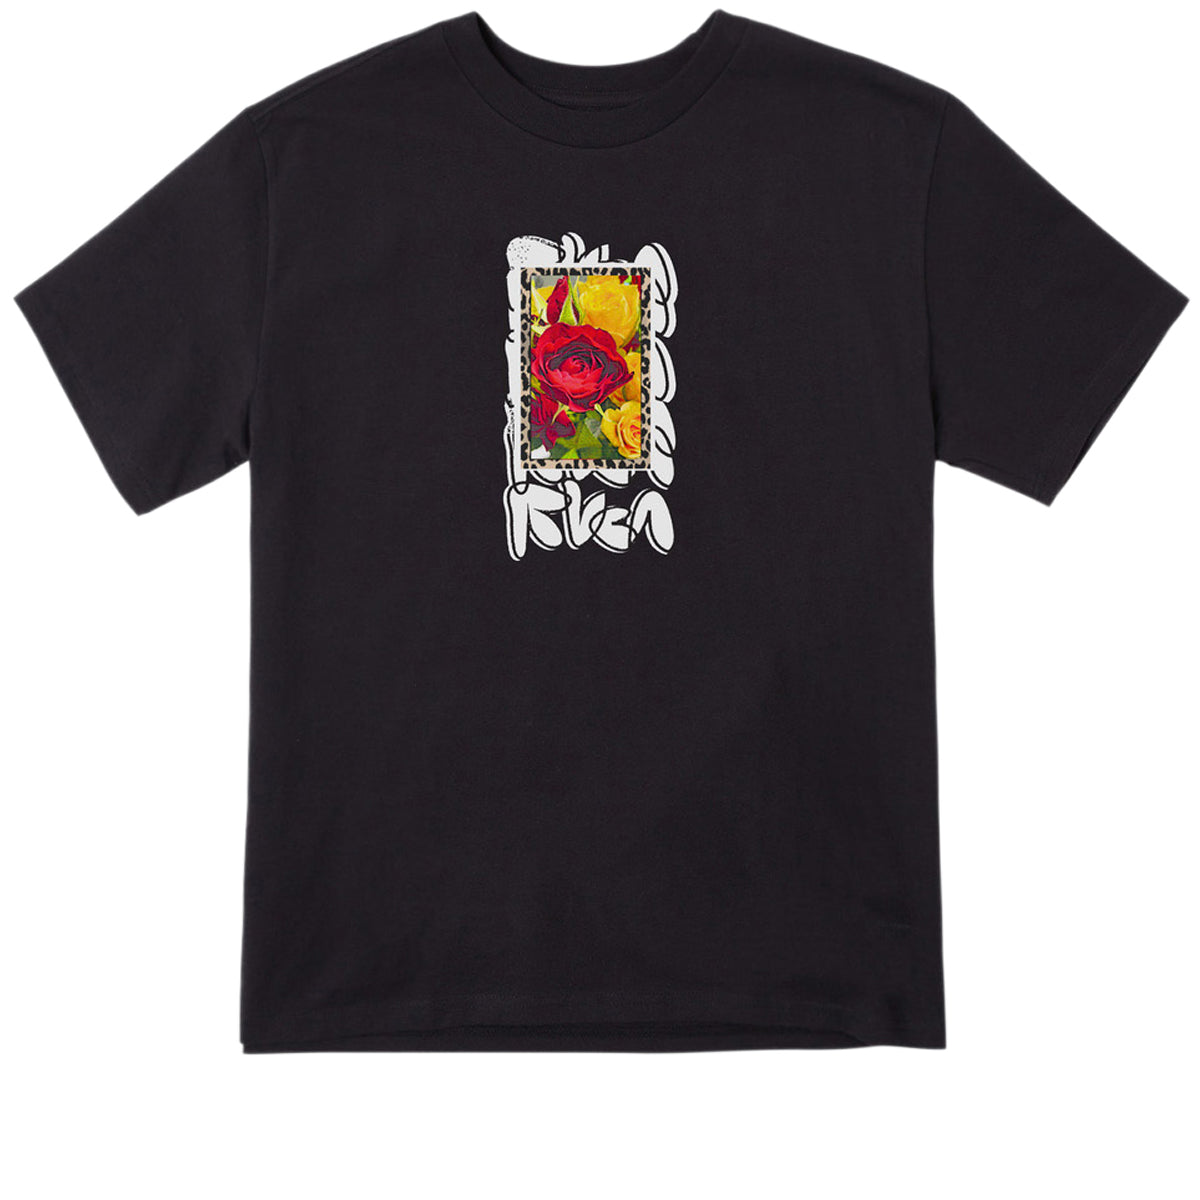 RVCA Rose Water T-Shirt - Black image 1